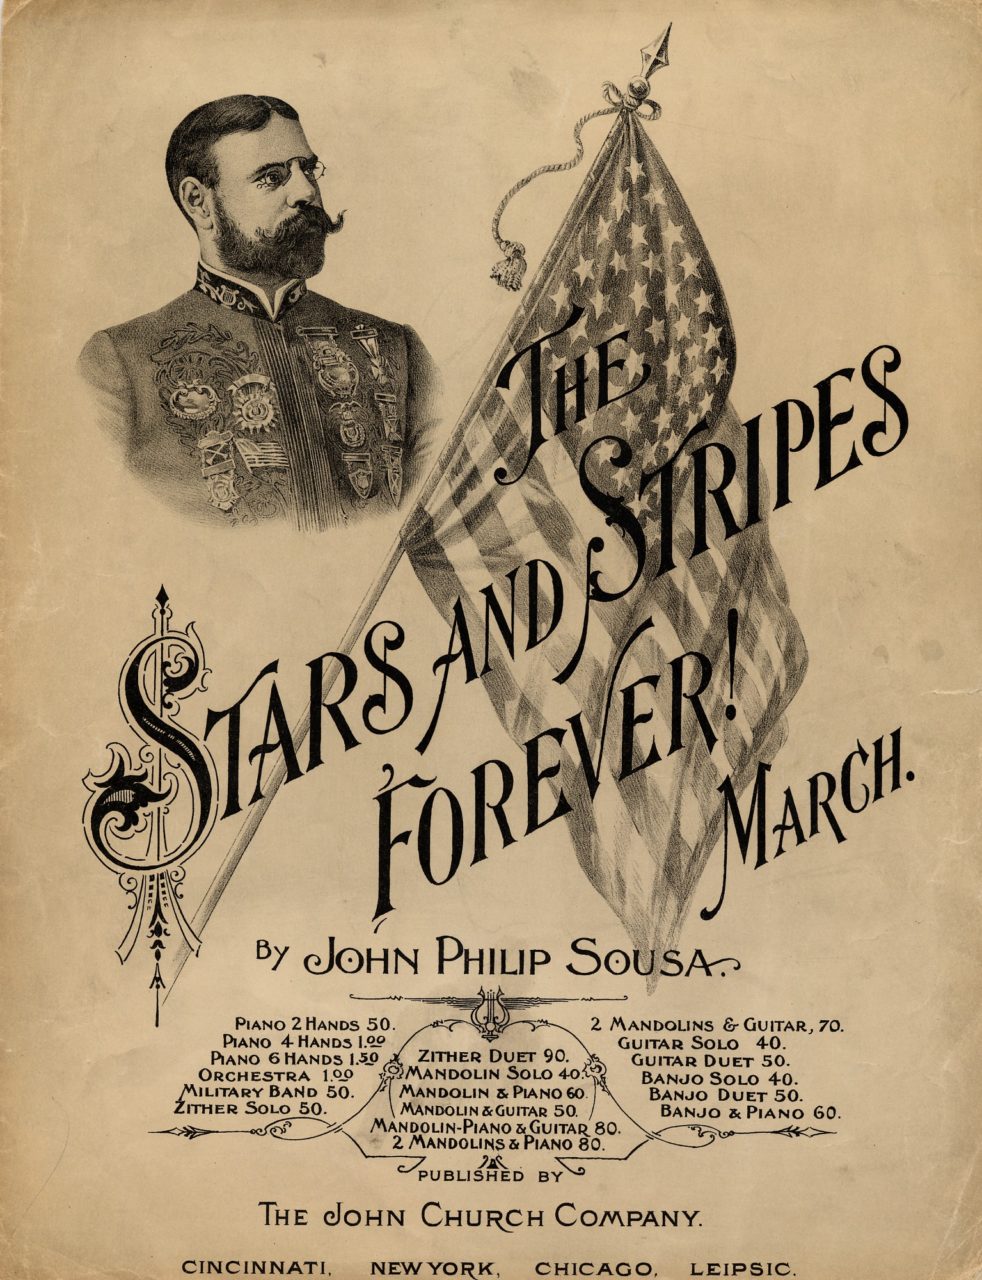 John Philip Sousa’s birthday